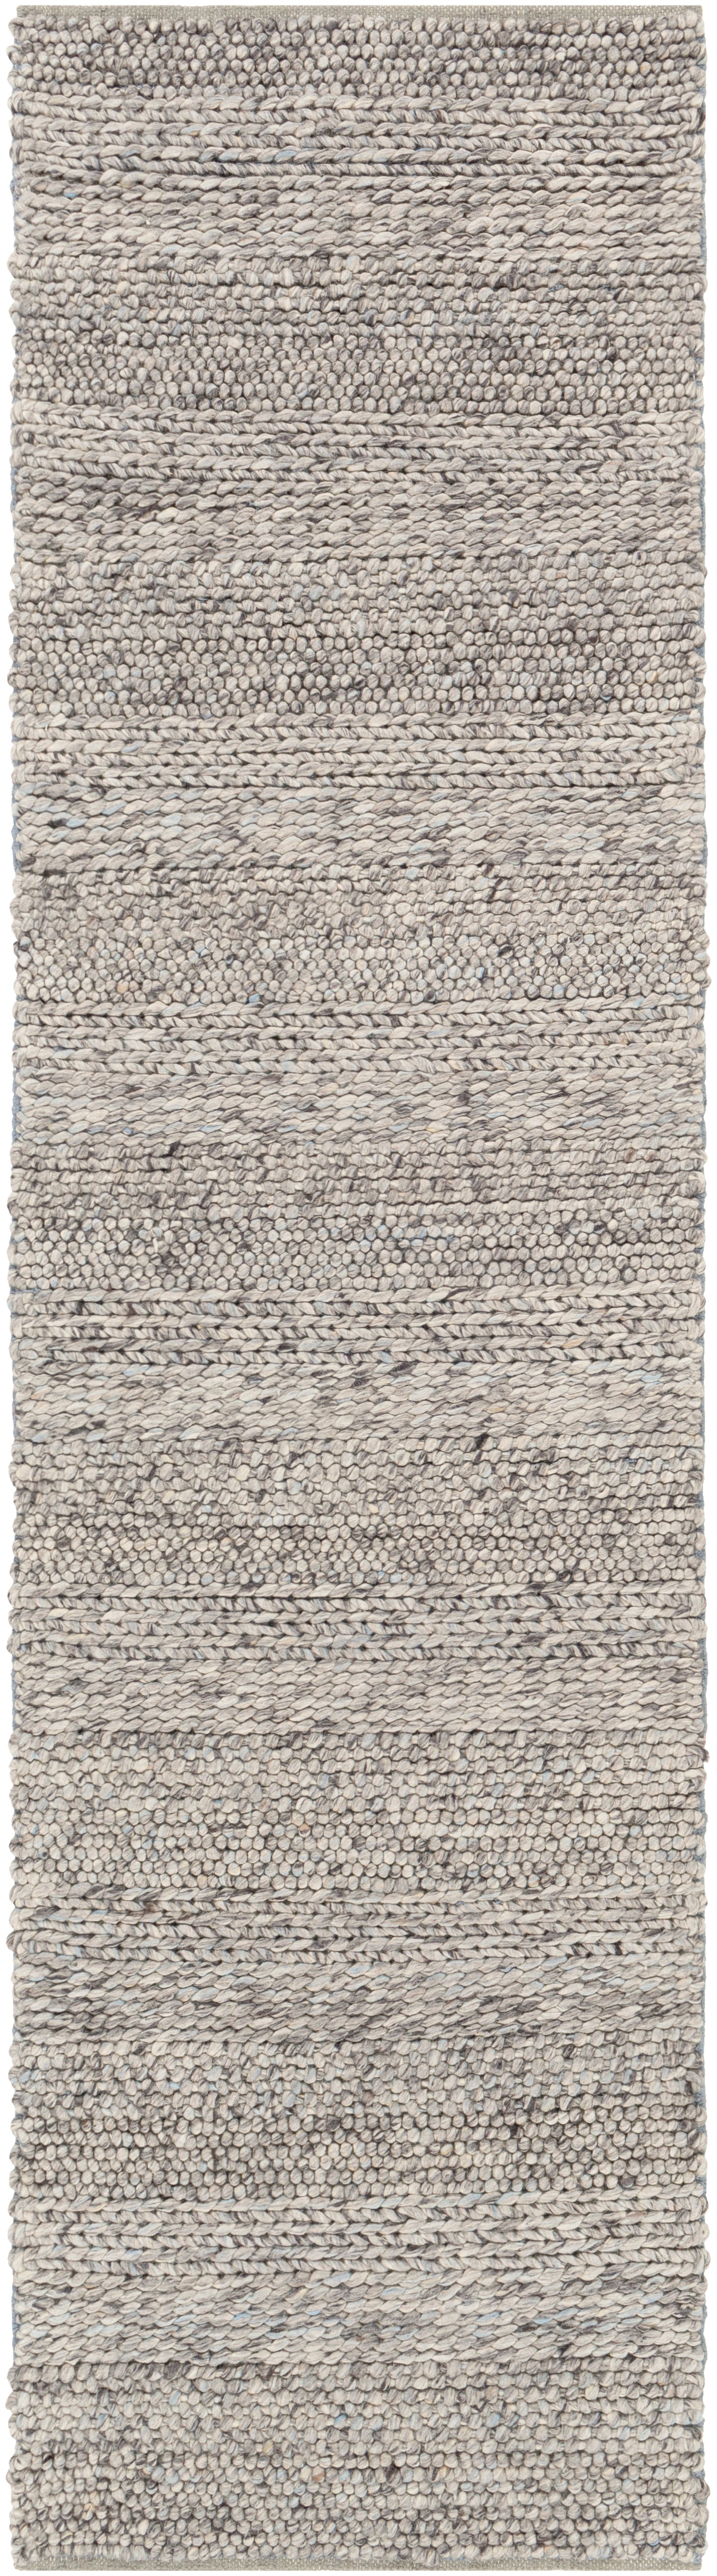 Tahoe 23134 Hand Woven Wool Indoor Area Rug by Surya Rugs